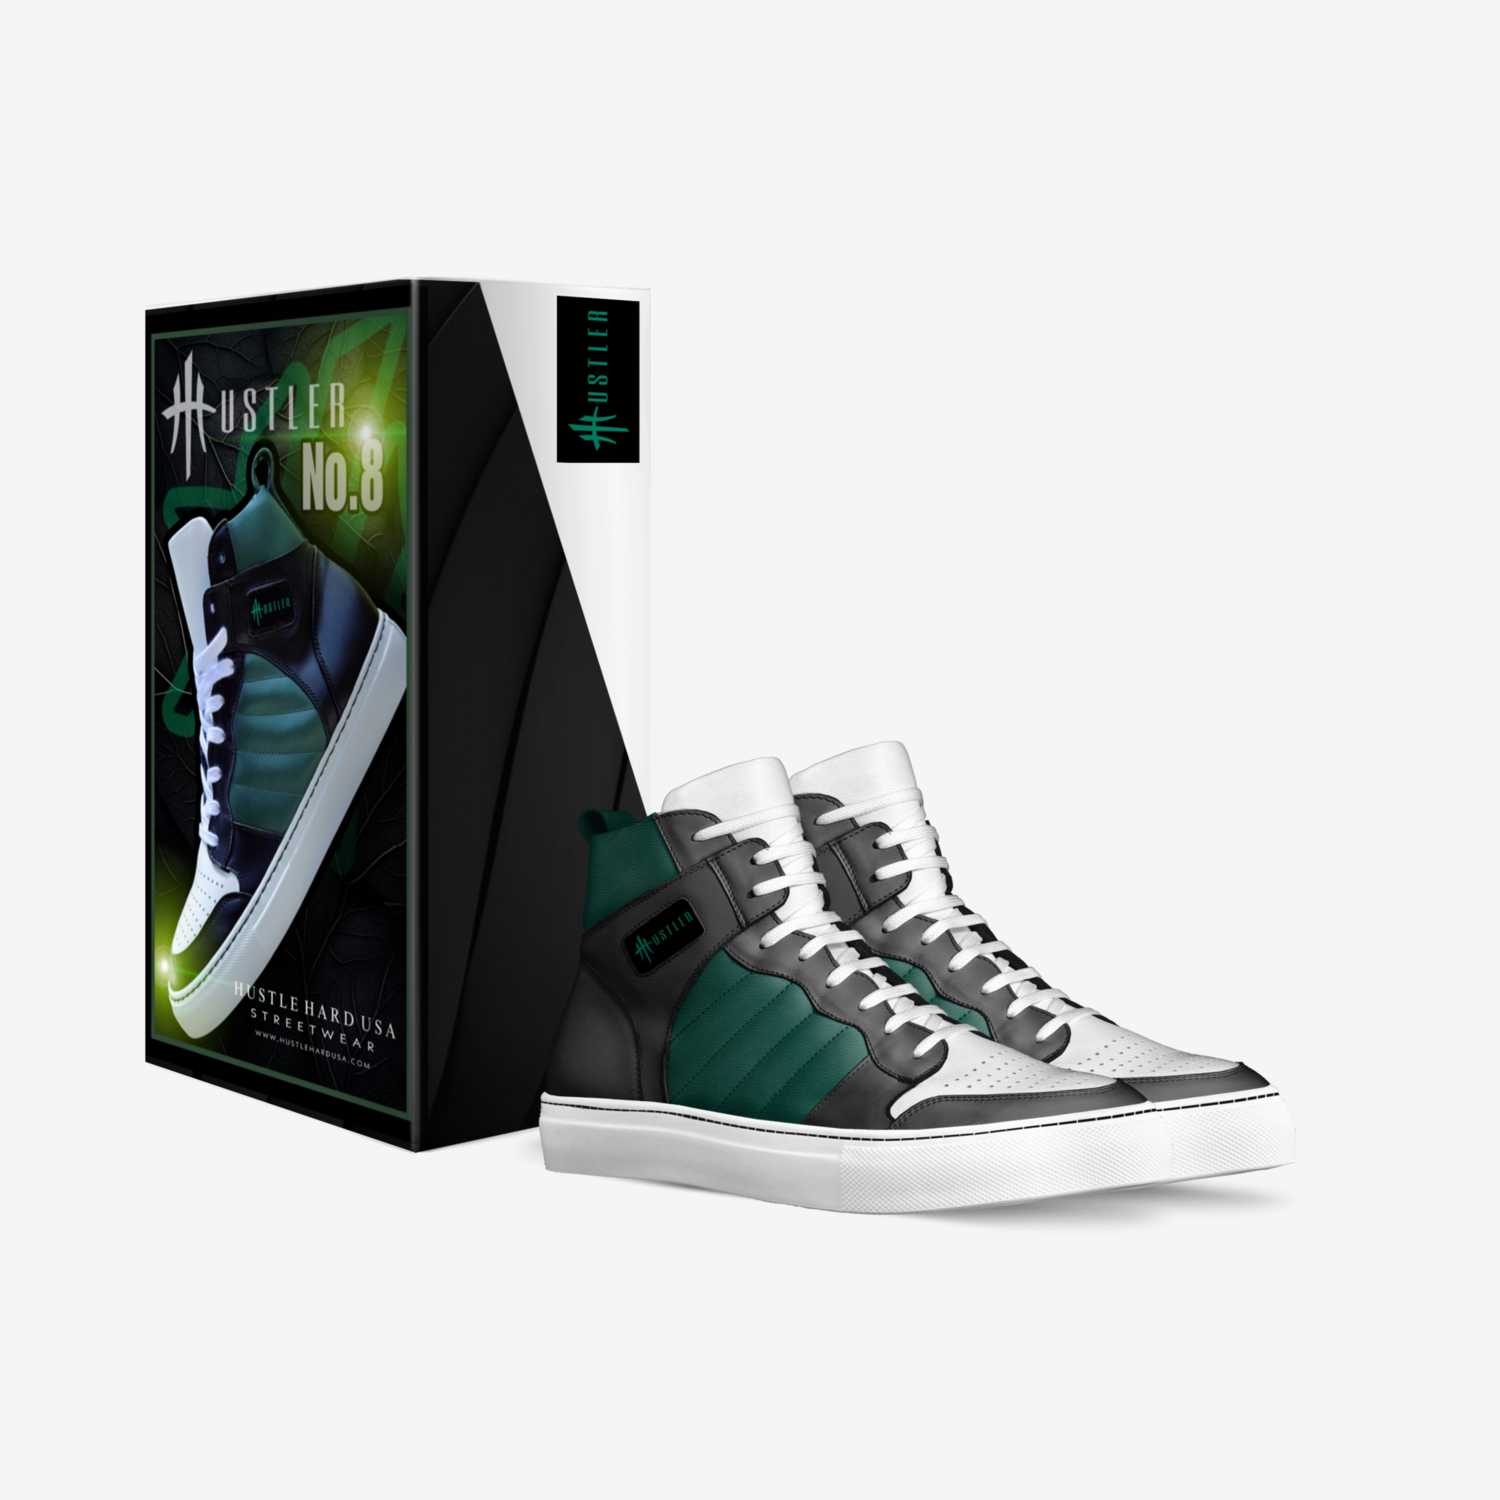 HustleHardUSA  custom made in Italy shoes by Roger Casanova | Box view